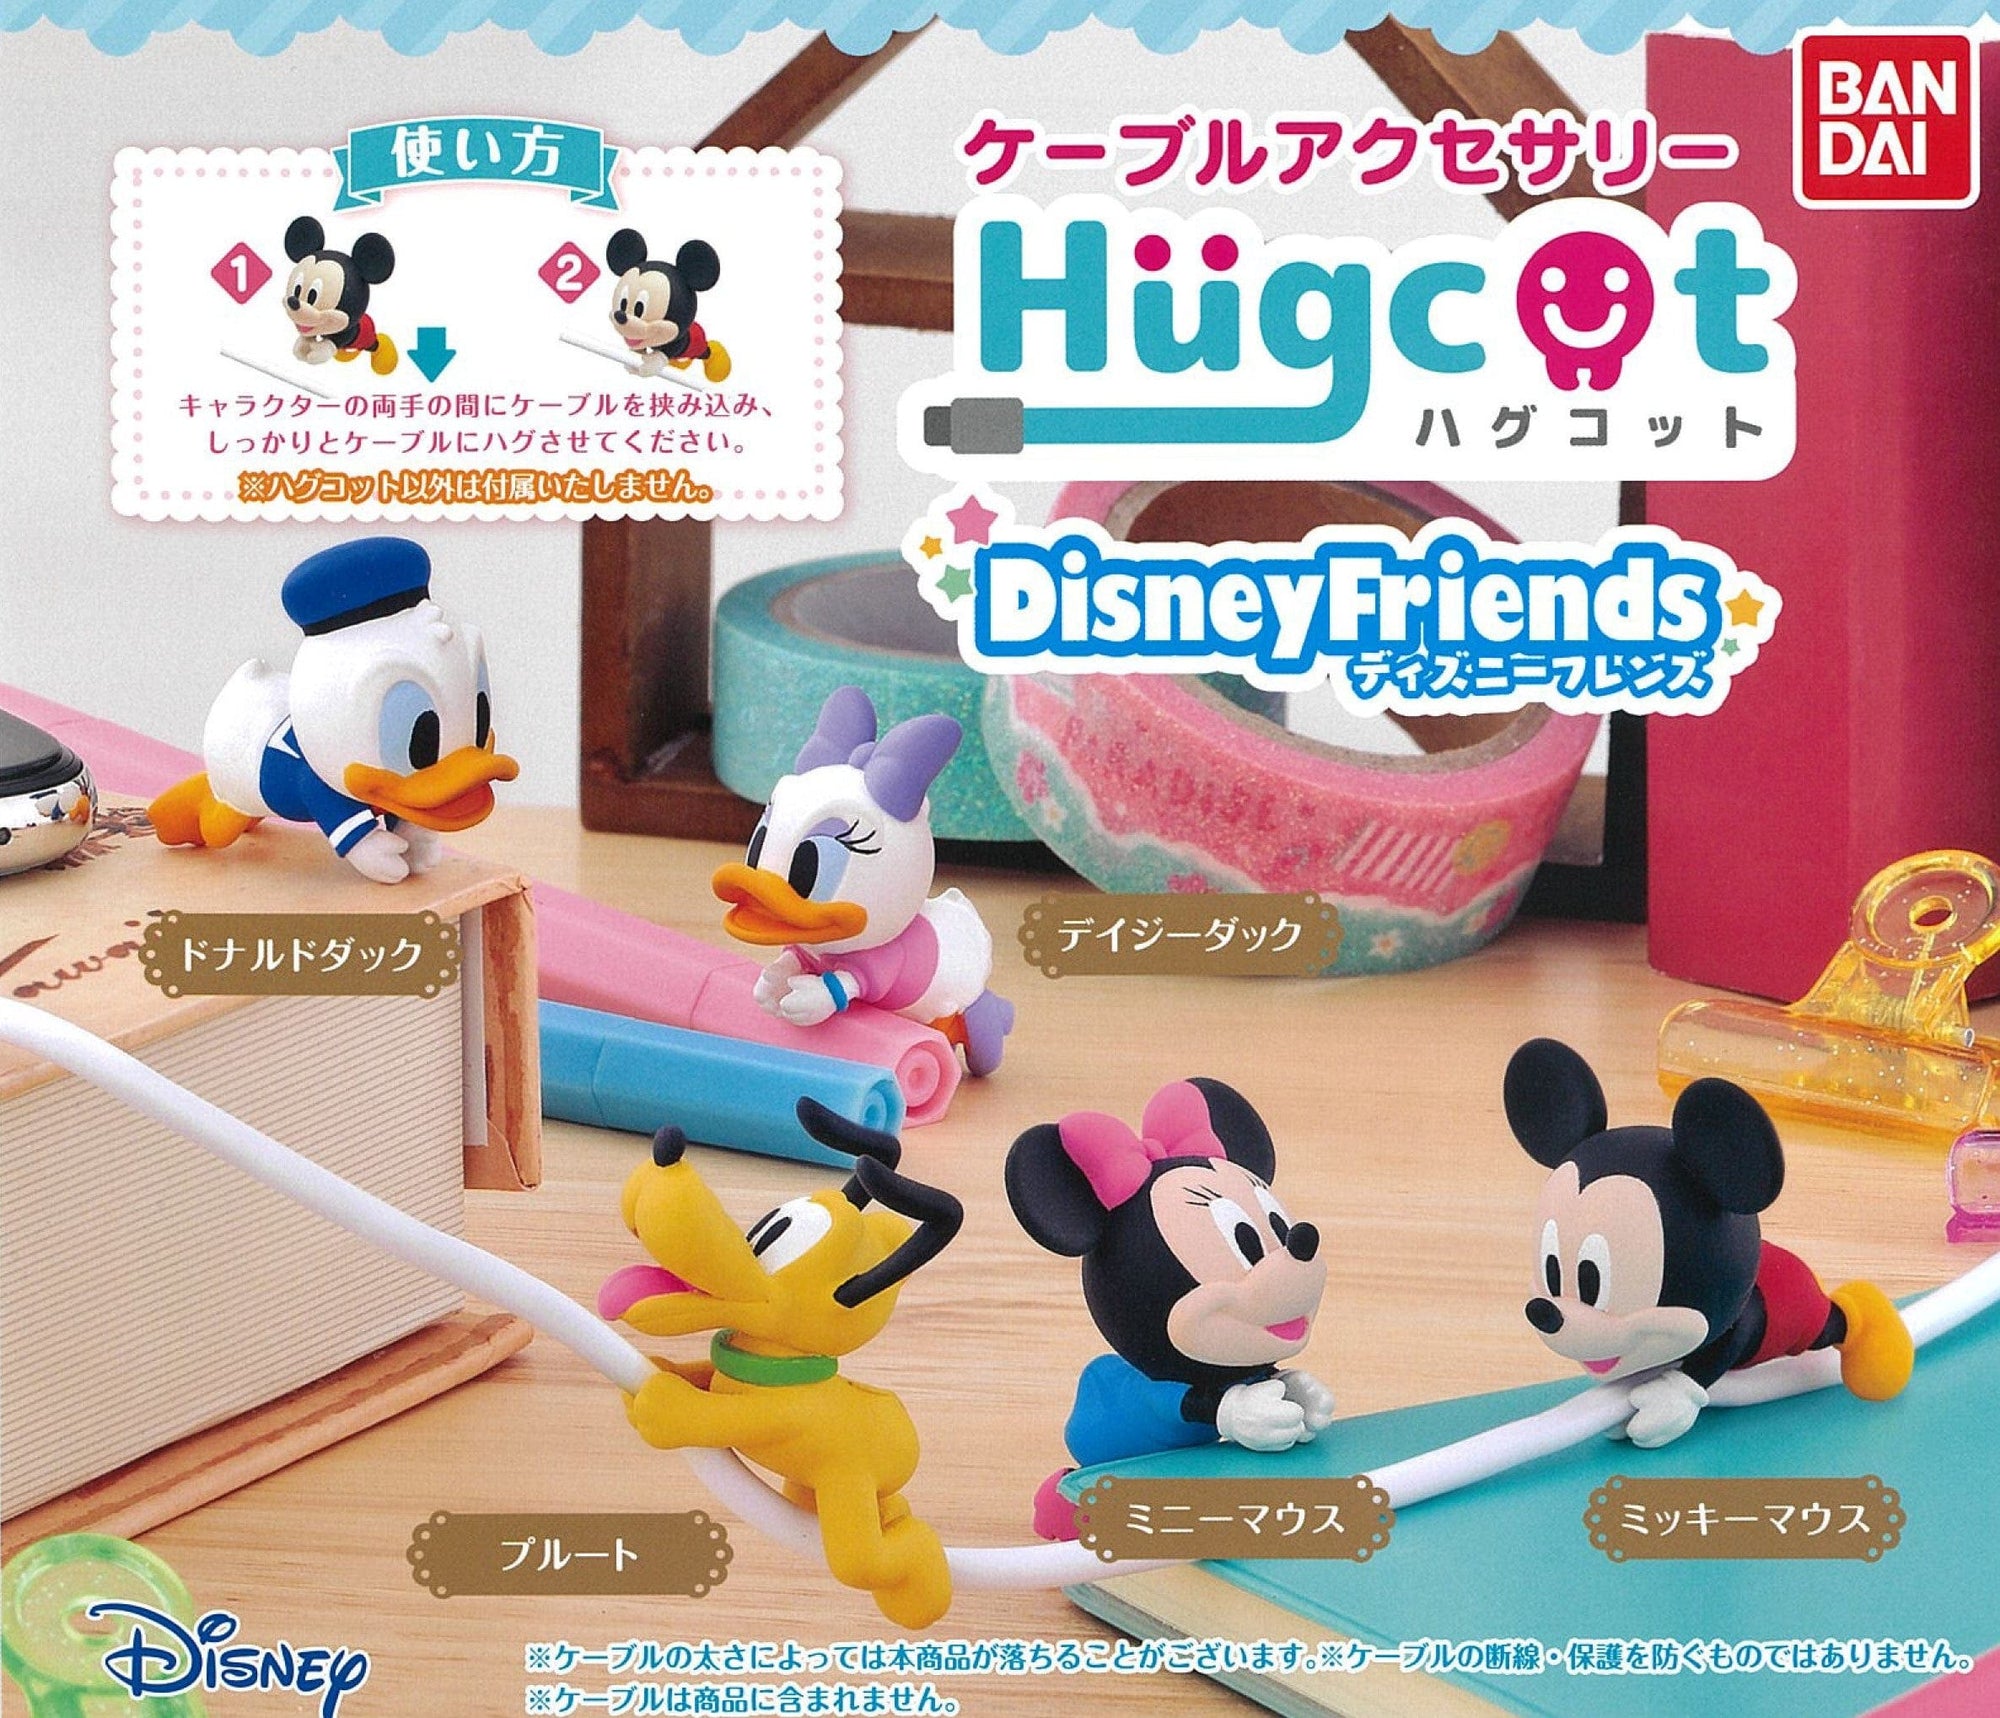 Bandai CP0383 - Disney Friends Hugcot - Complete Set